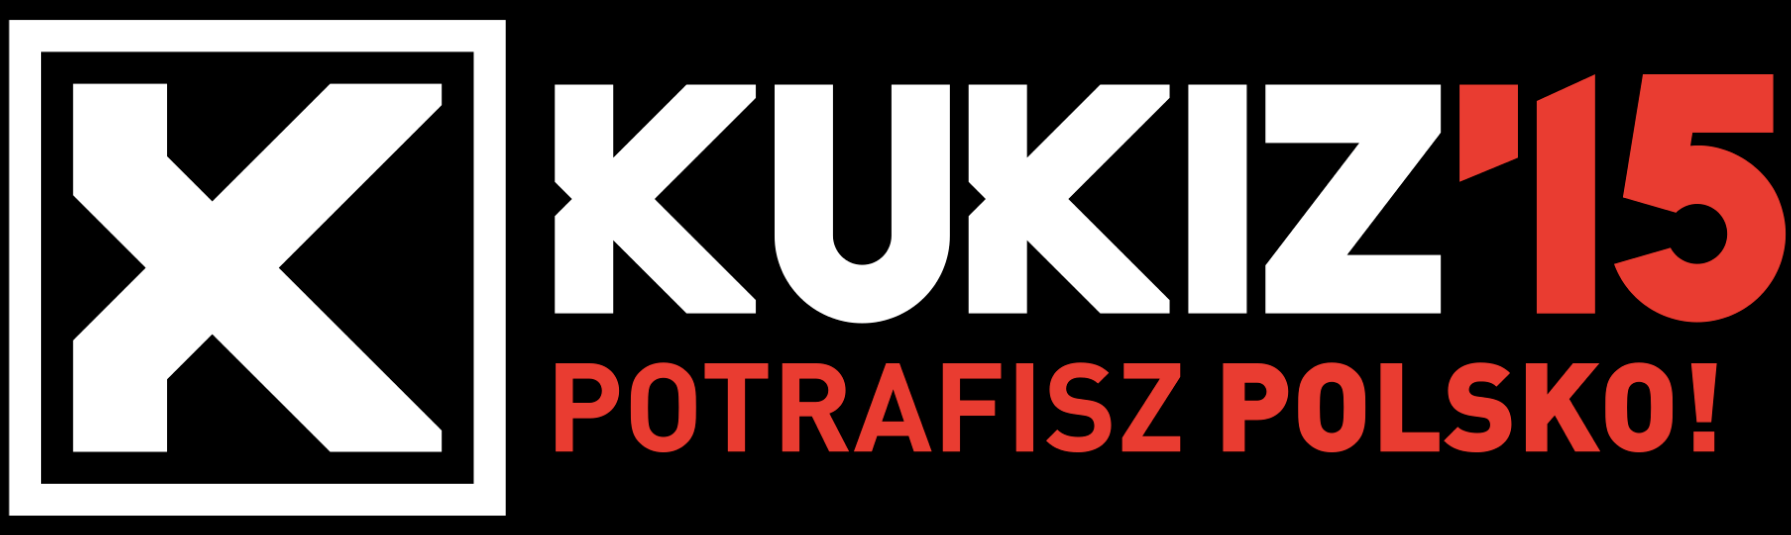 di maio Pawel Kukiz Kukiz'15 europee fascisti - 3